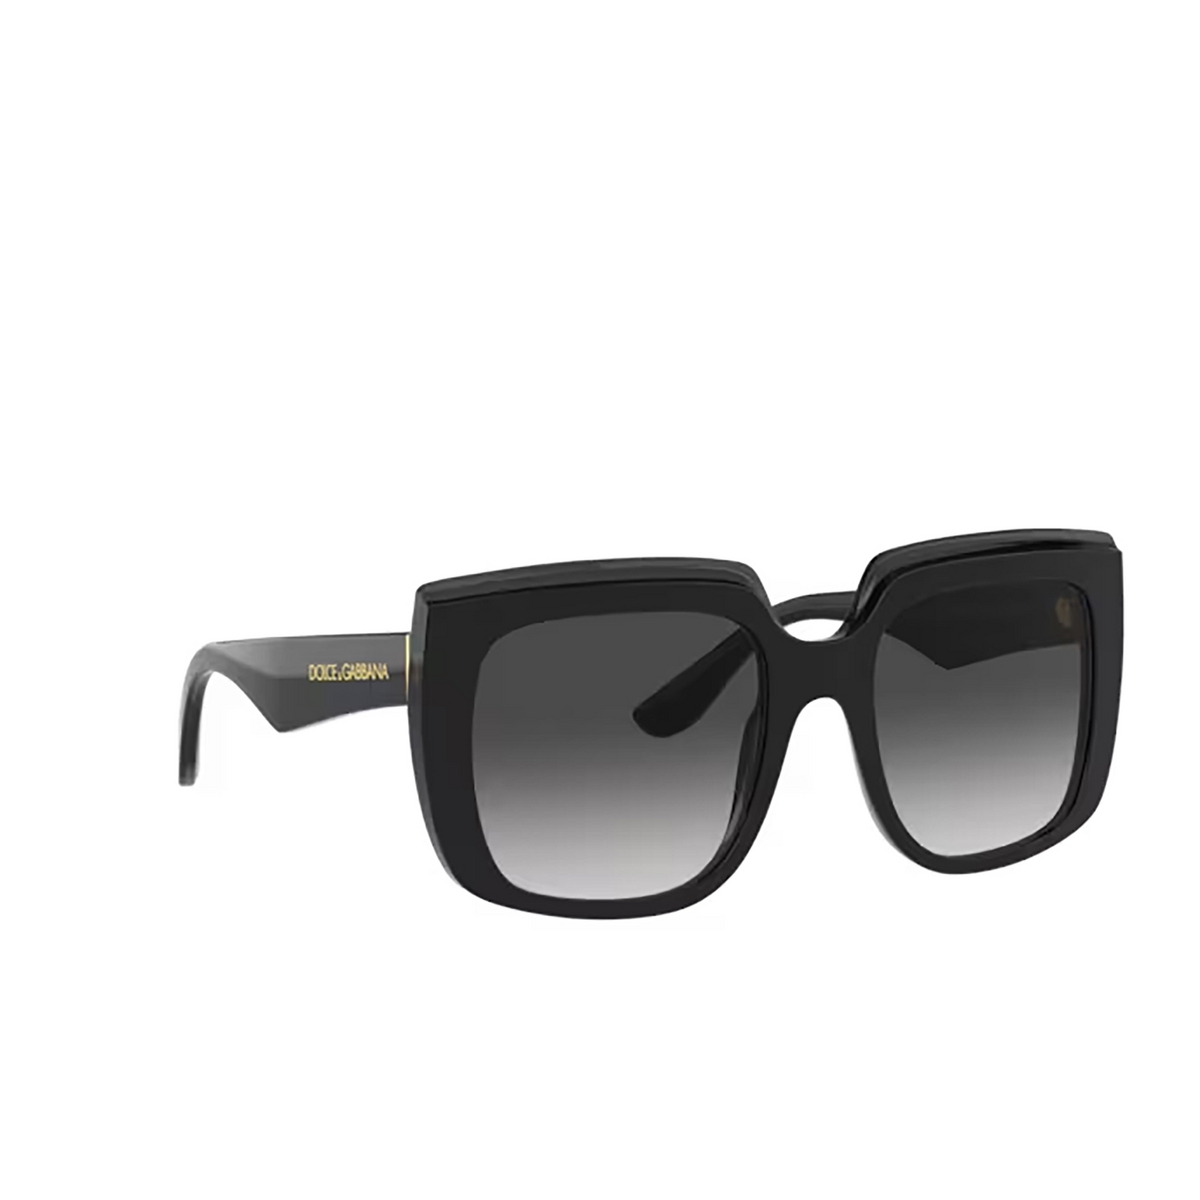 Dolce & Gabbana DG4414 Sunglasses 501/8G Black on transparent black - three-quarters view